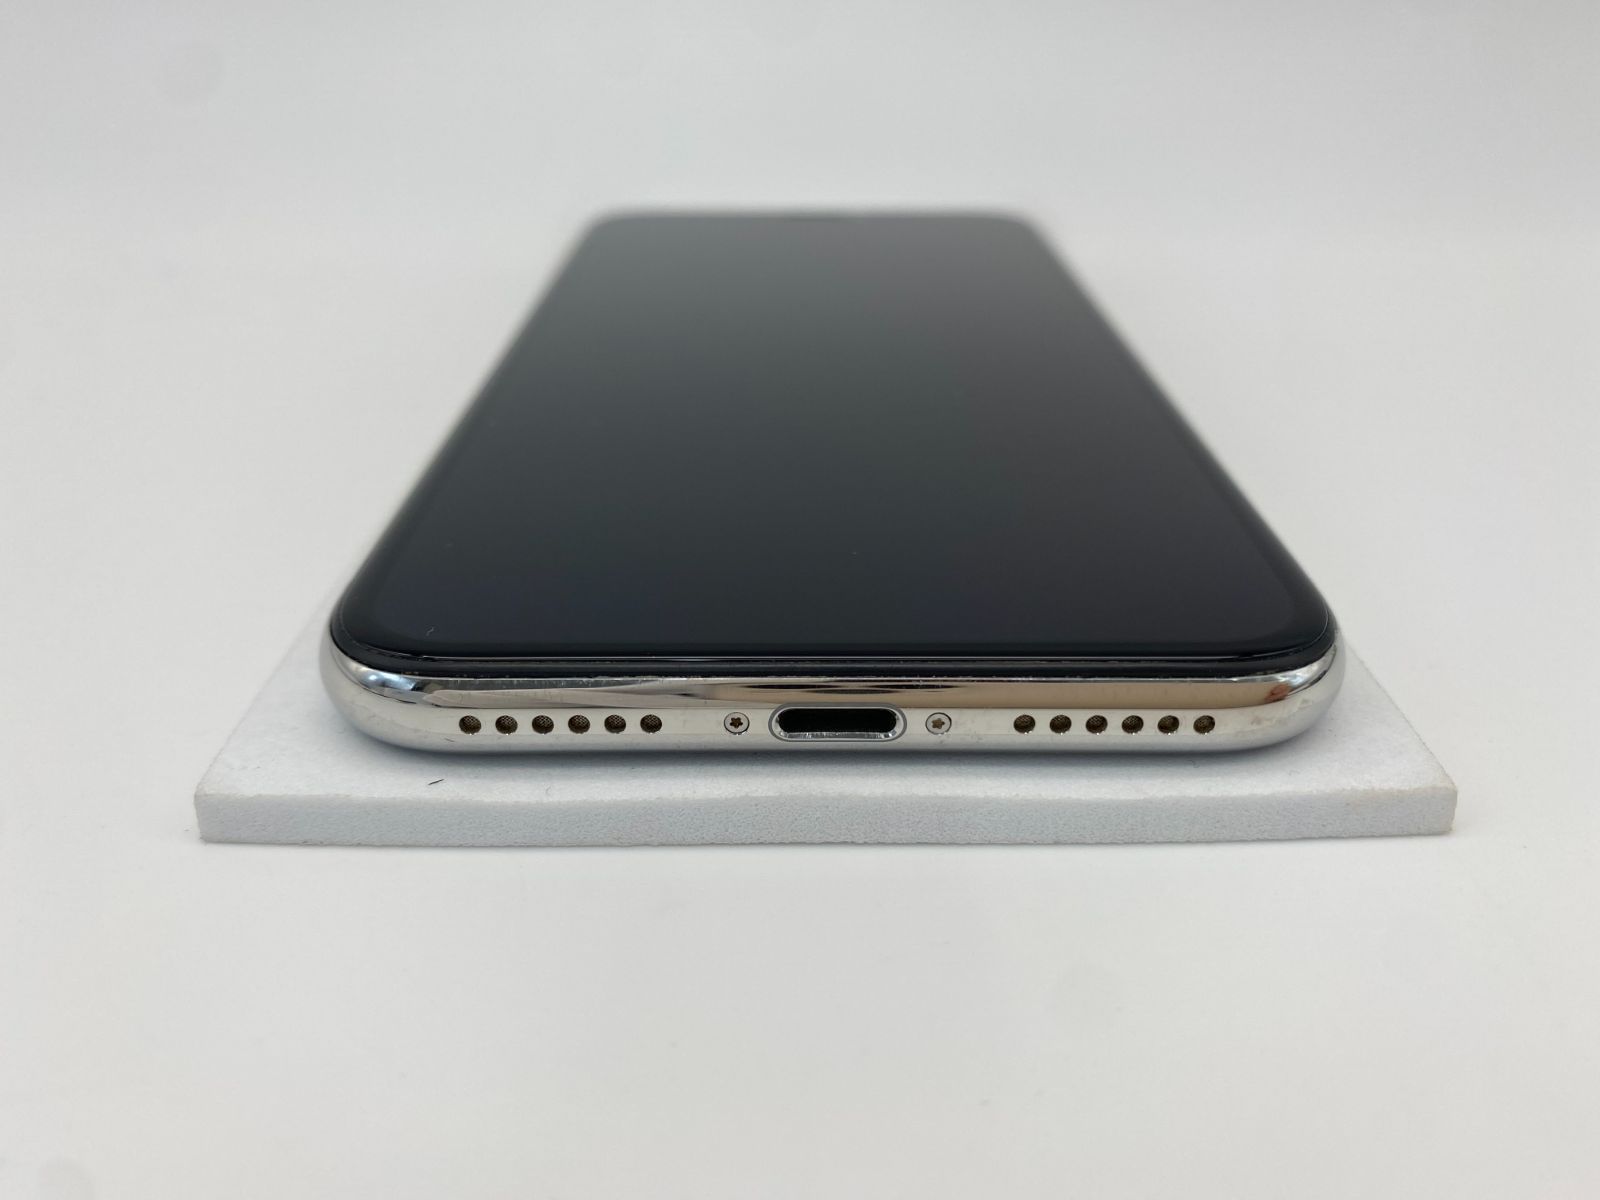 iPhoneX 64GB シルバー/シムフリー/大容量新品BT100％ X16 - メルカリ